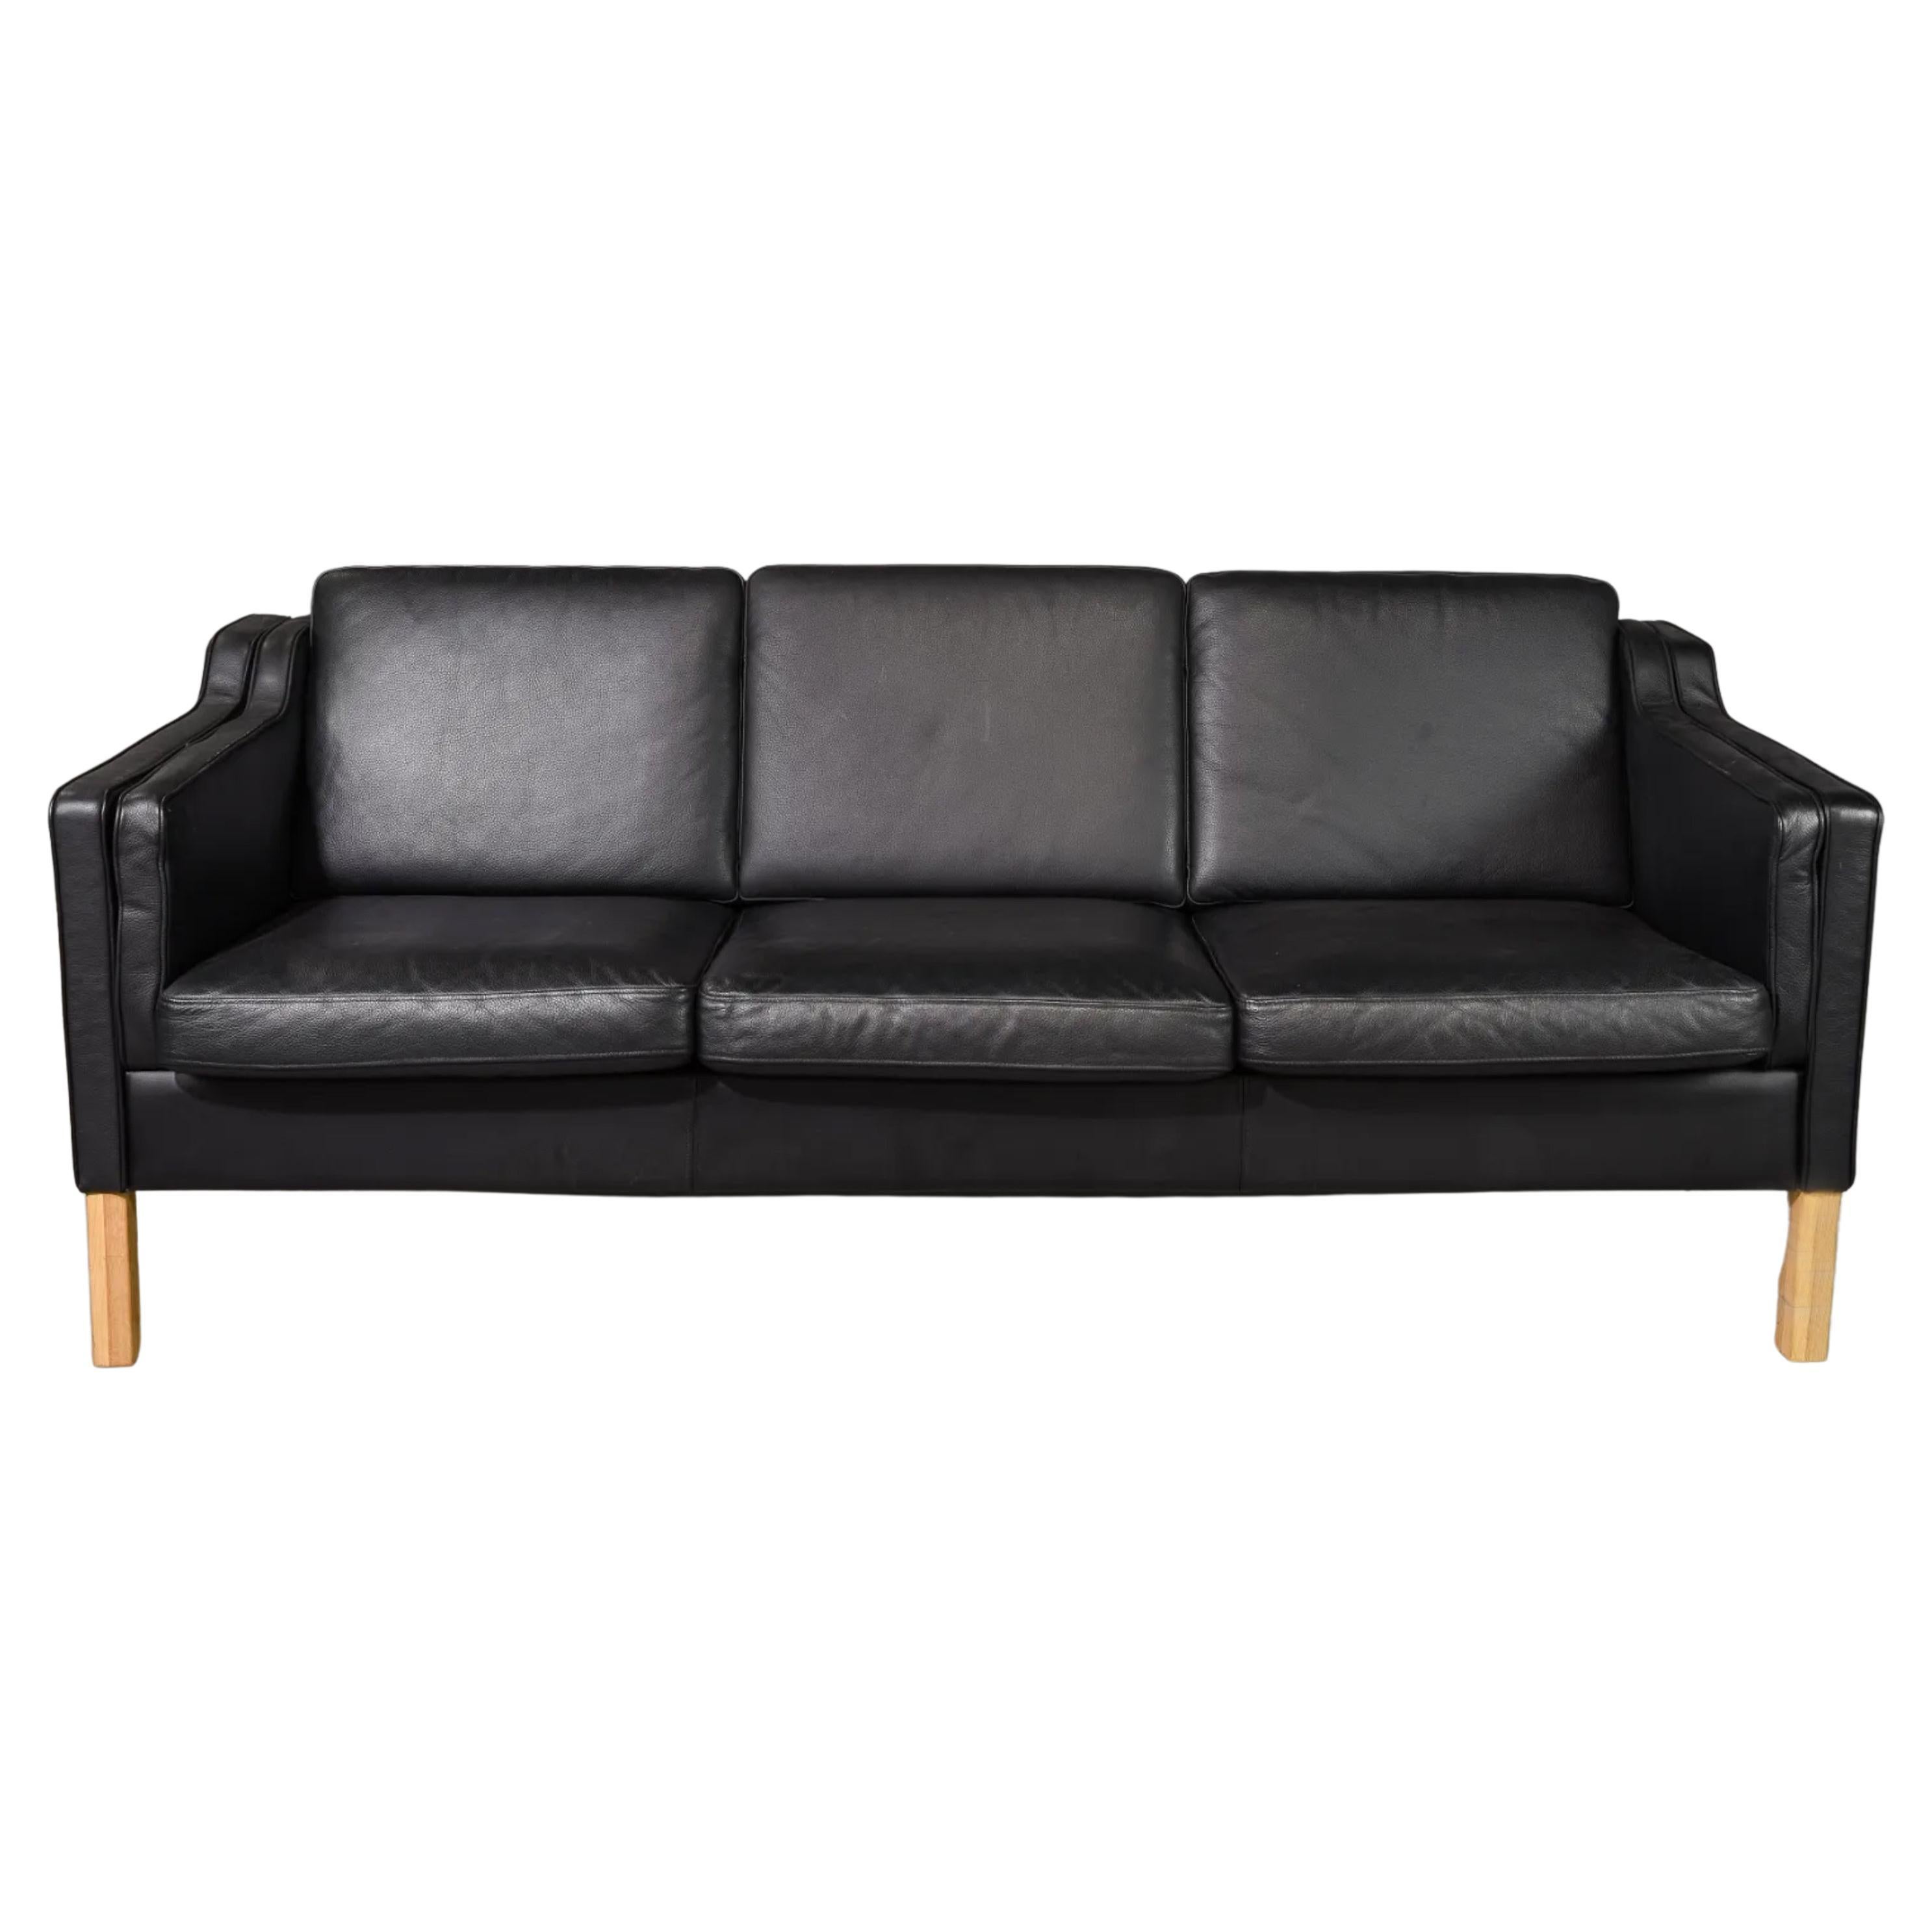 Superb Midcentury Danish Modern Beautiful Black Leather 3 Seat Sofa Birch Legs